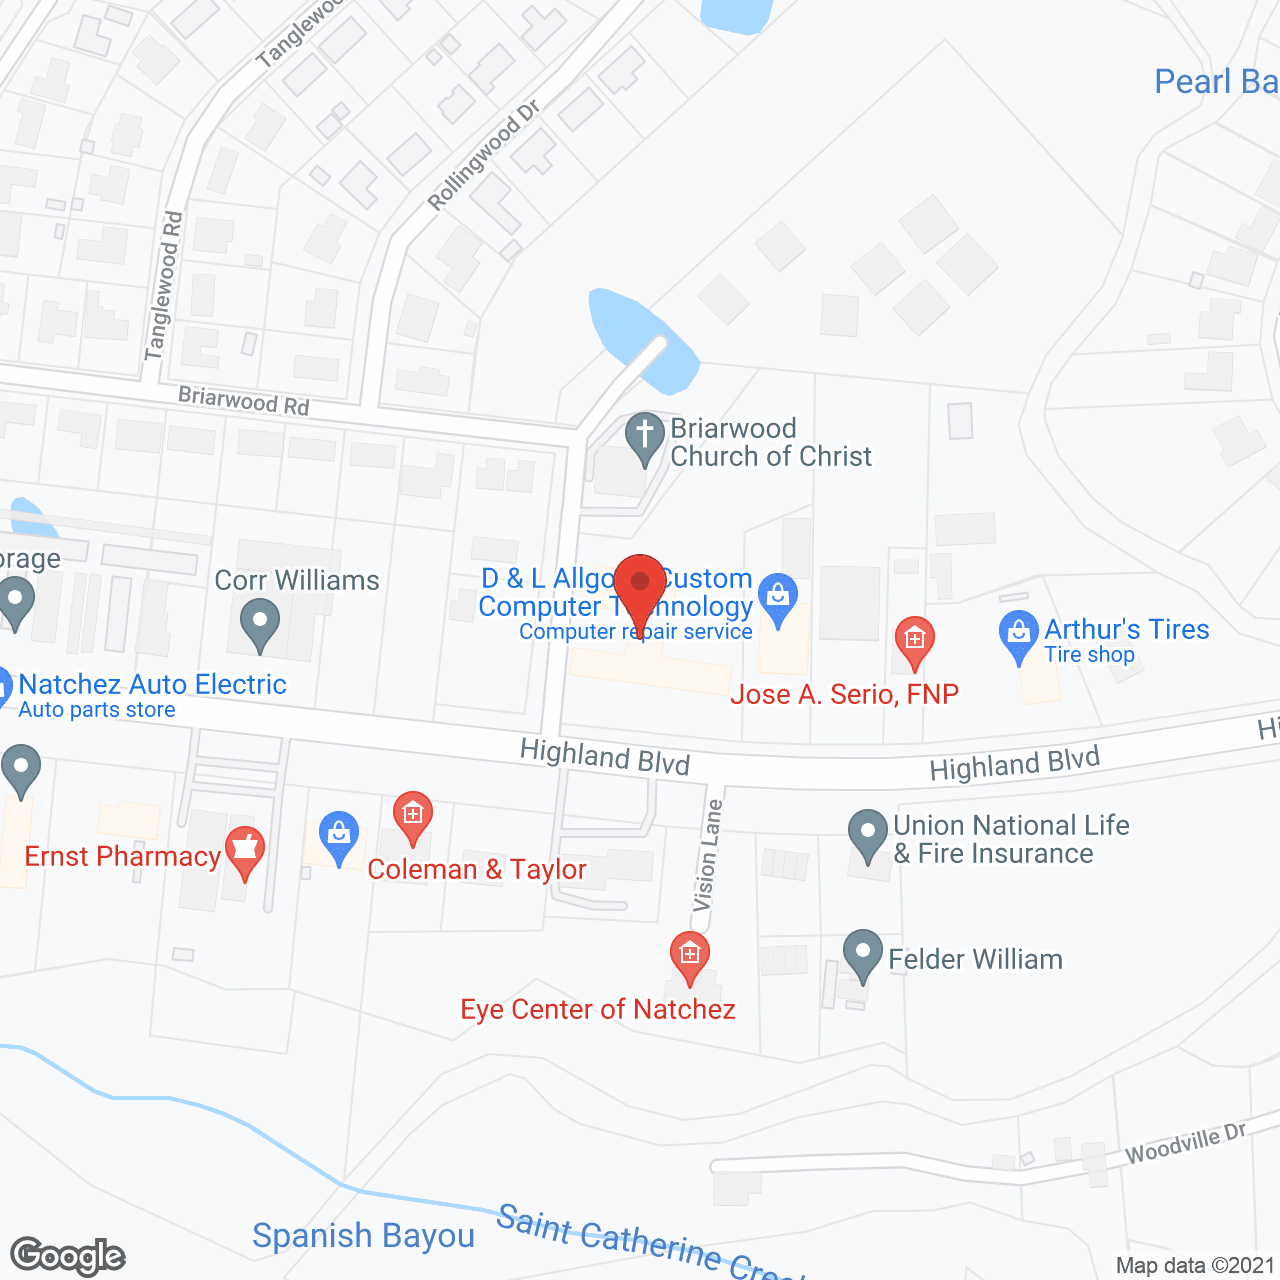 Magnolia Village in google map